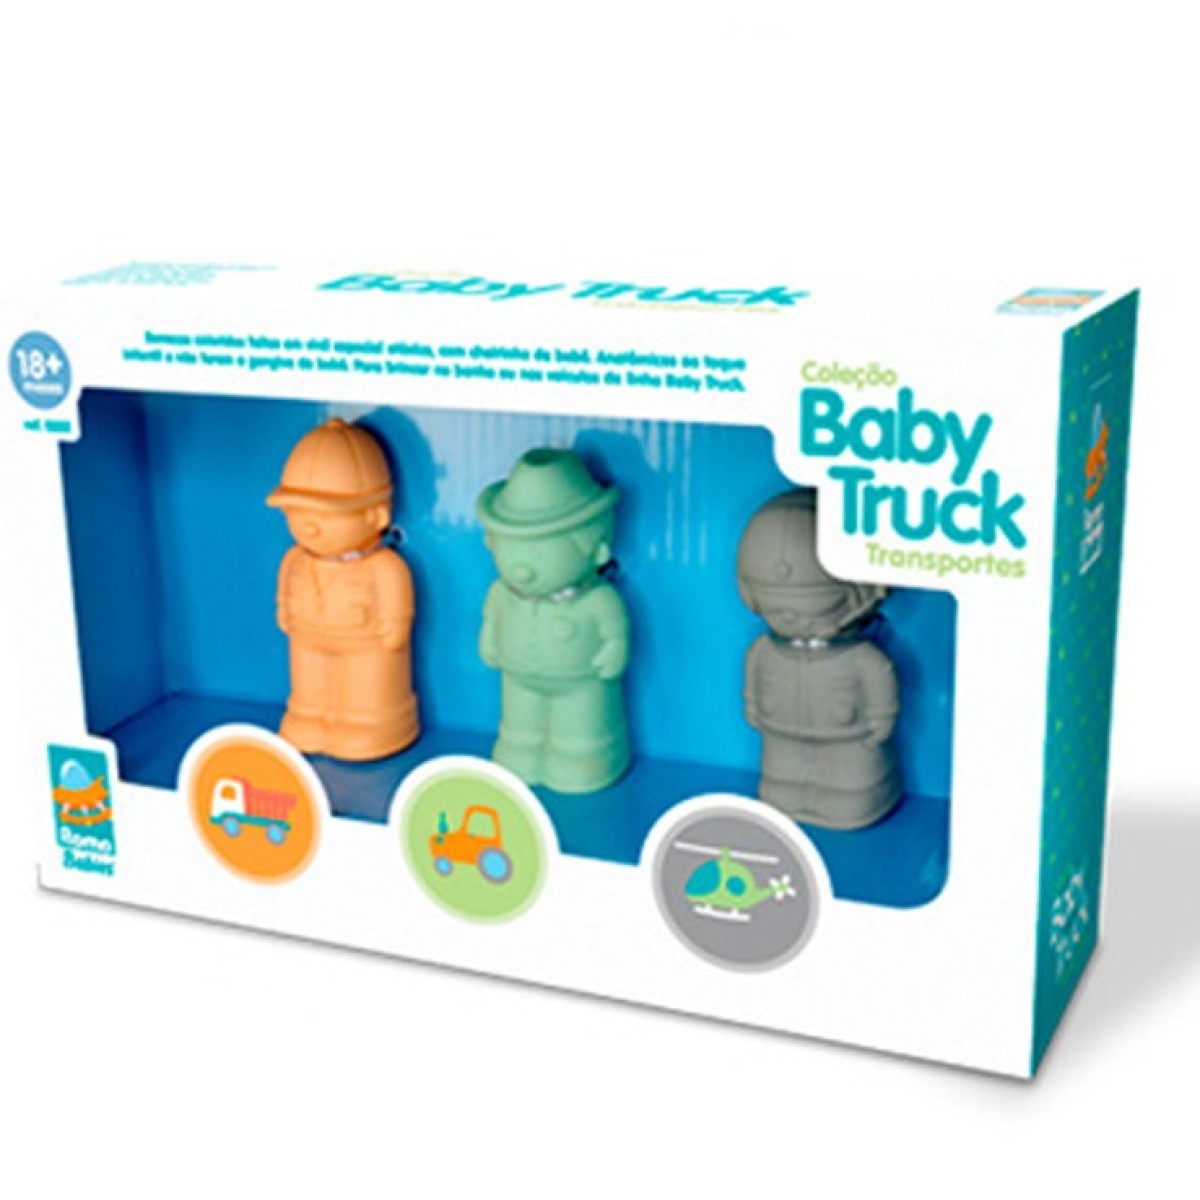 Baby truck - transportes - ref. 252-252-55016